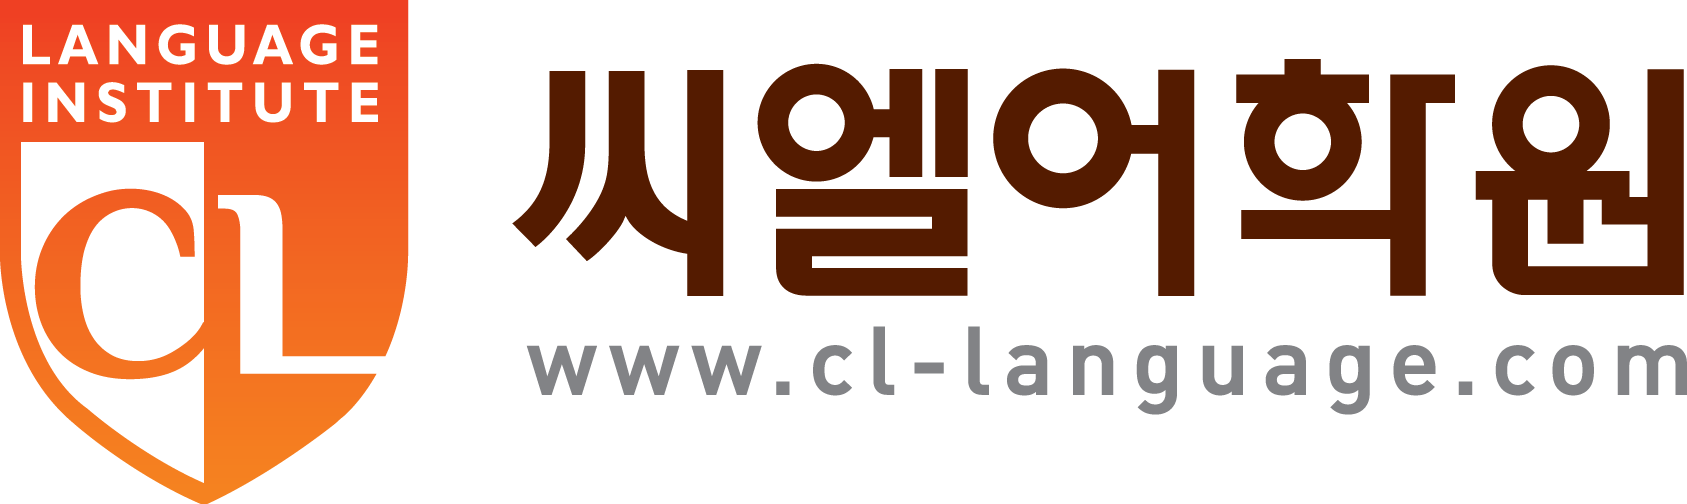 CL-Language